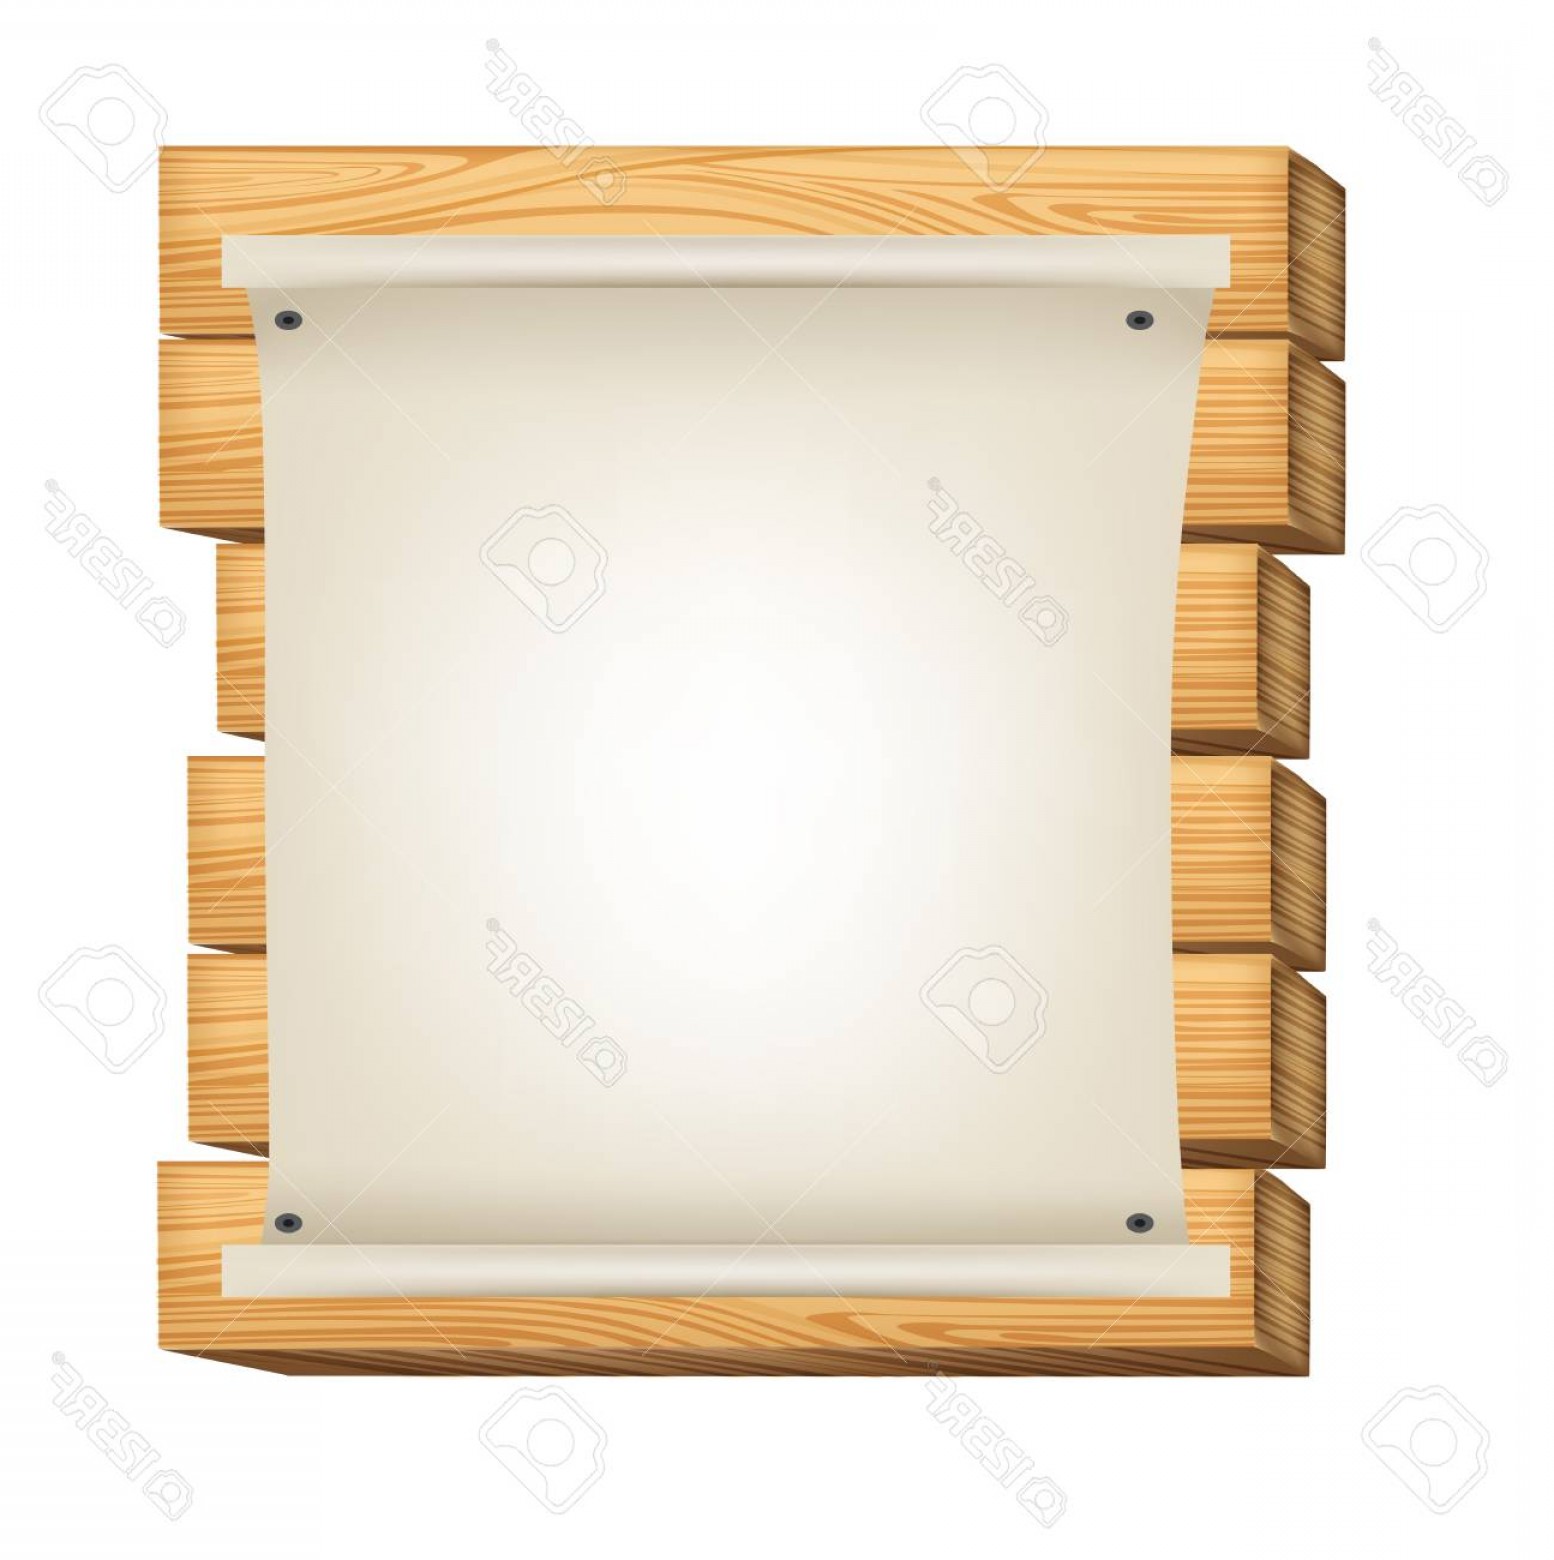 Photopaper Roll Sign On Wooden Board Background Isolated Handandbeak